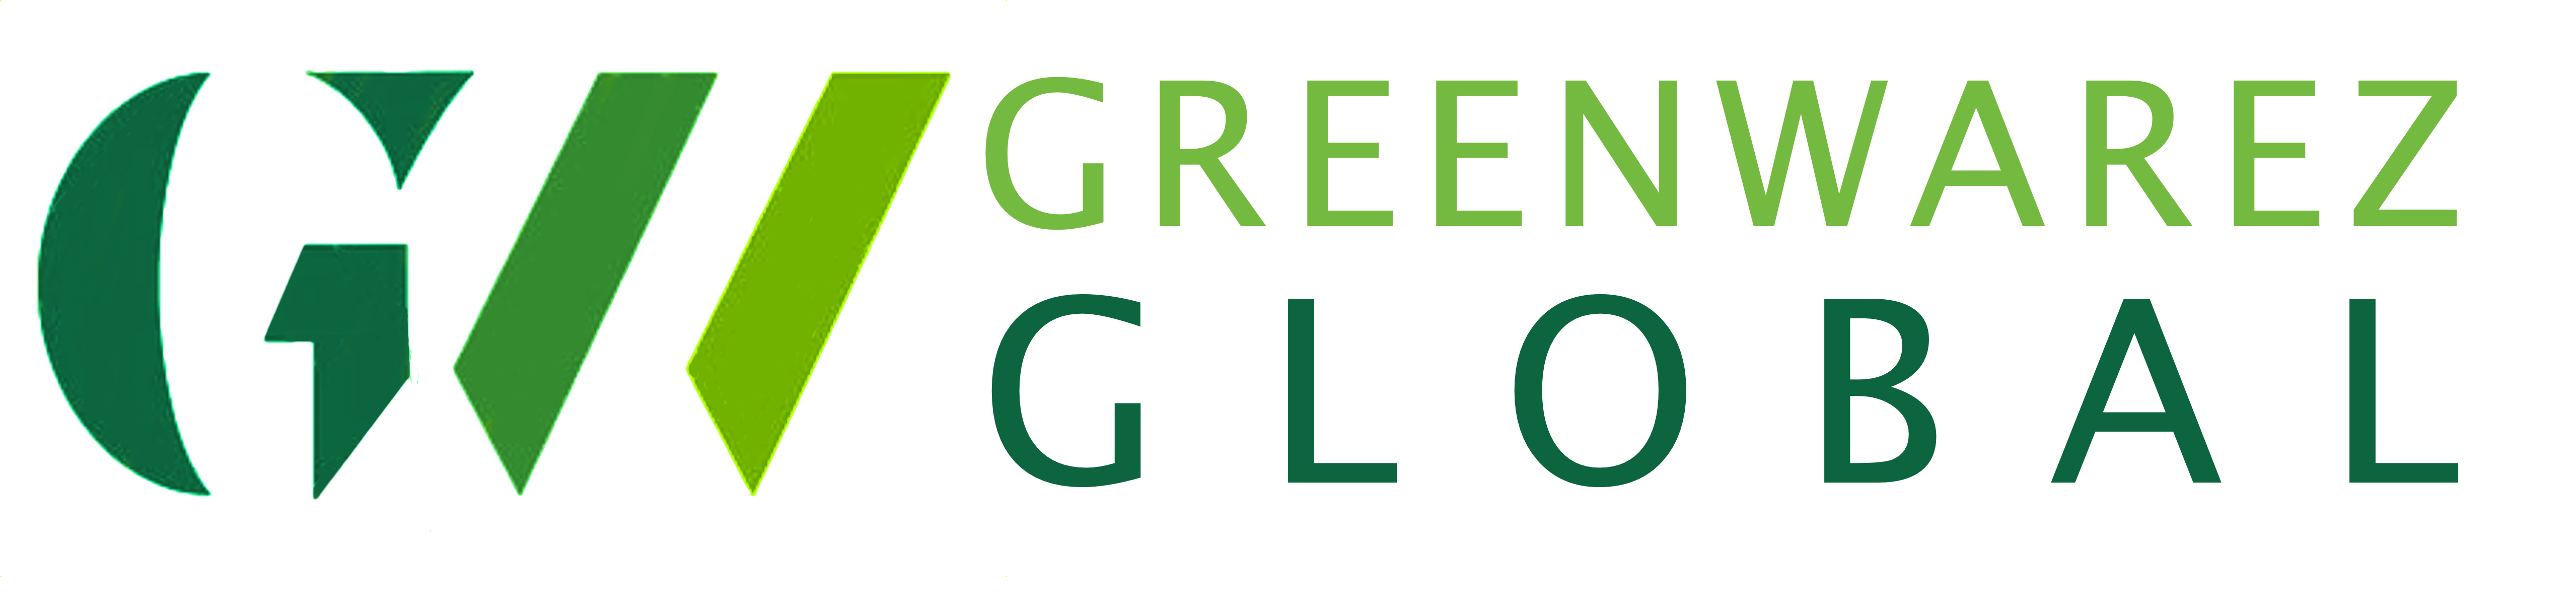 Greenwarez Global